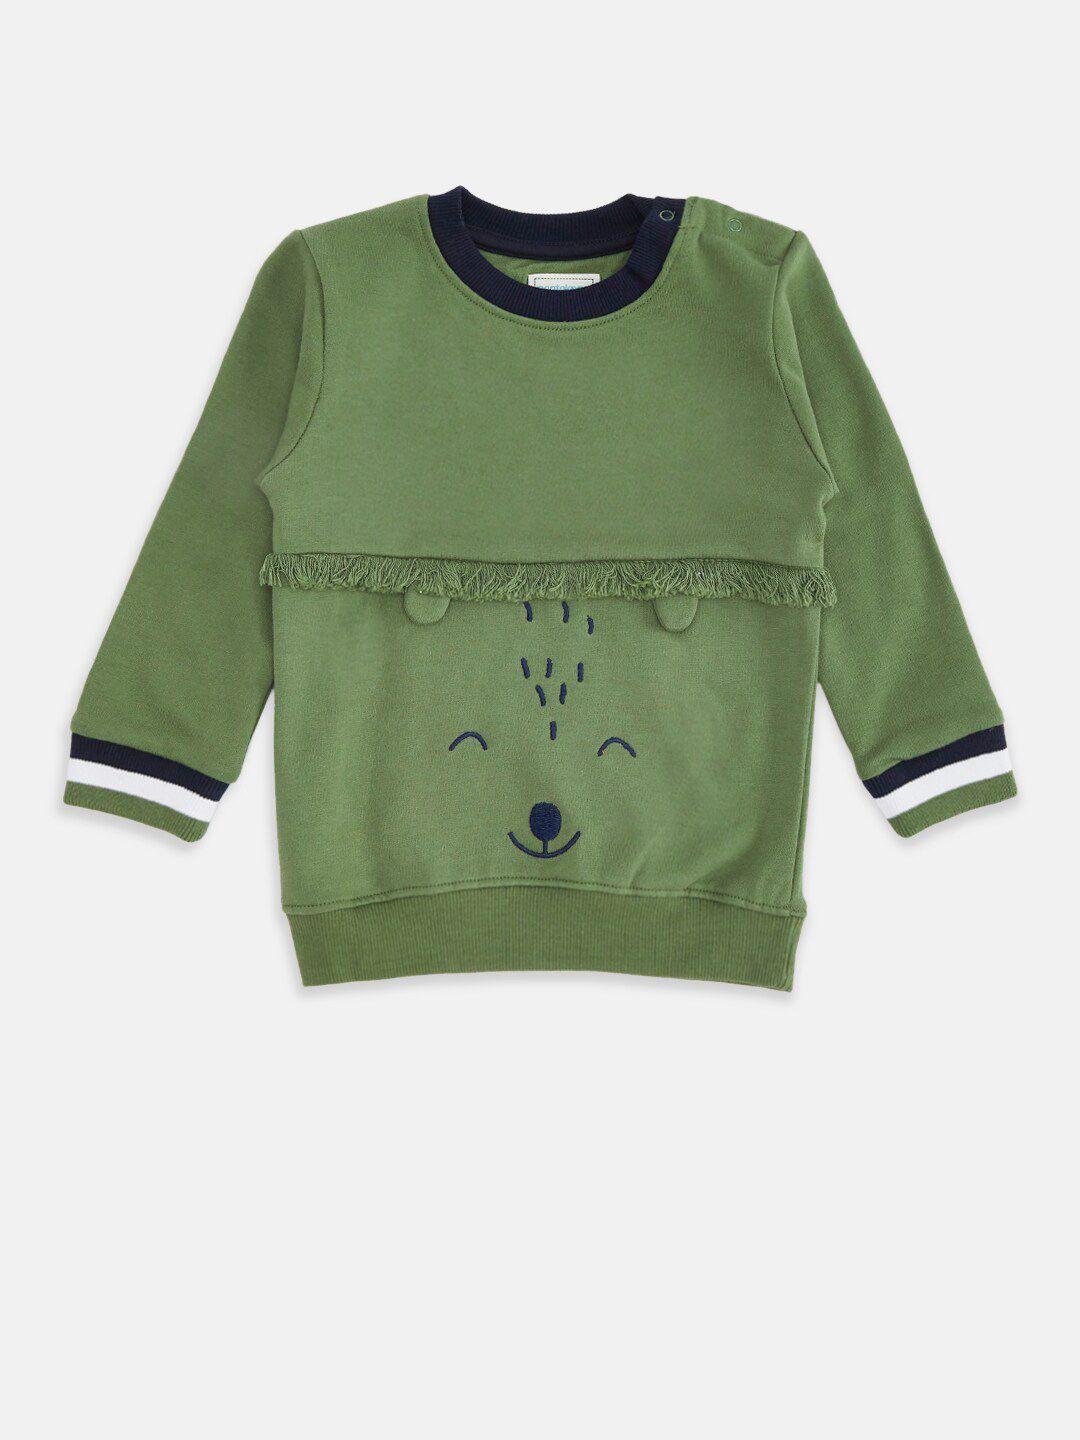 pantaloons-baby-boys-olive-green-printed-sweatshirt